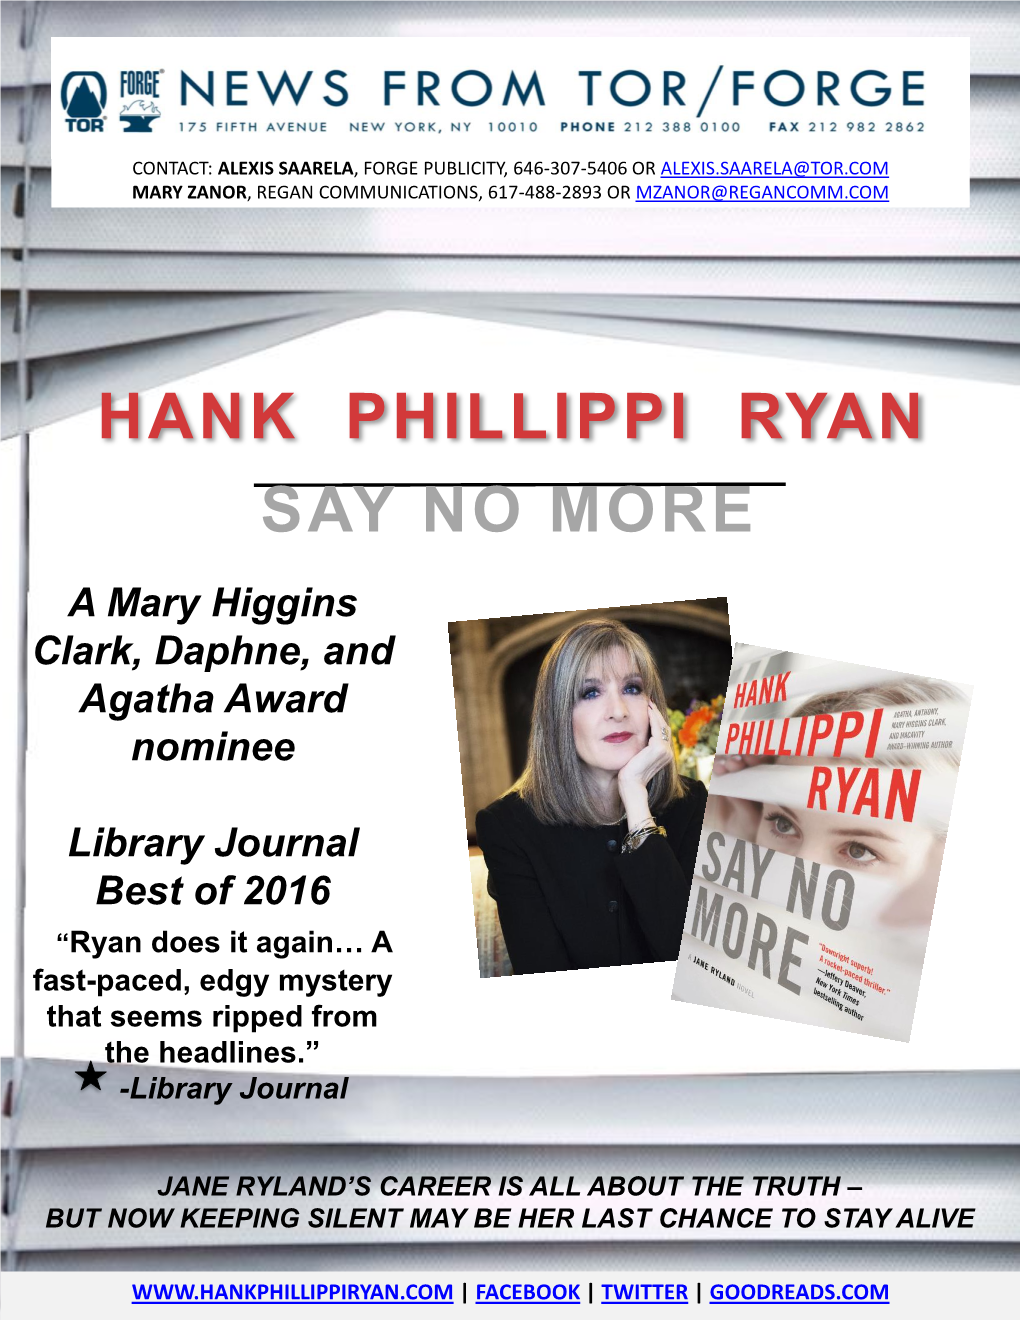 HANK PHILLIPPI RYAN SAY NO MORE a Mary Higgins Clark, Daphne, and Agatha Award Nominee